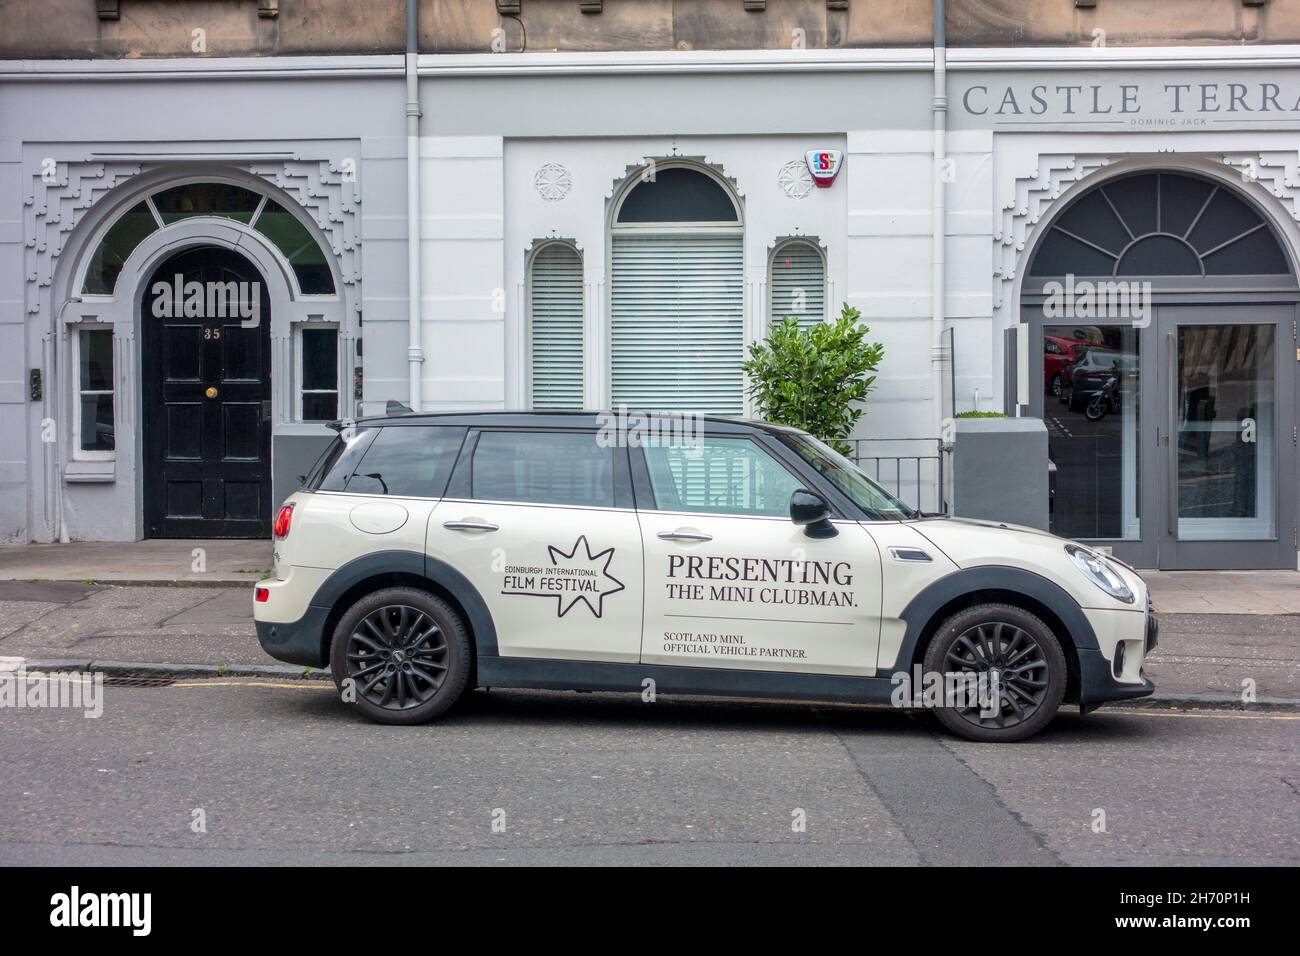 2017 Mini Clubman Edinburgh International Film Festival Vehicle Partnership With Scotland Mini Parked At Castle Terrace Edinburgh Scotland Stock Photo